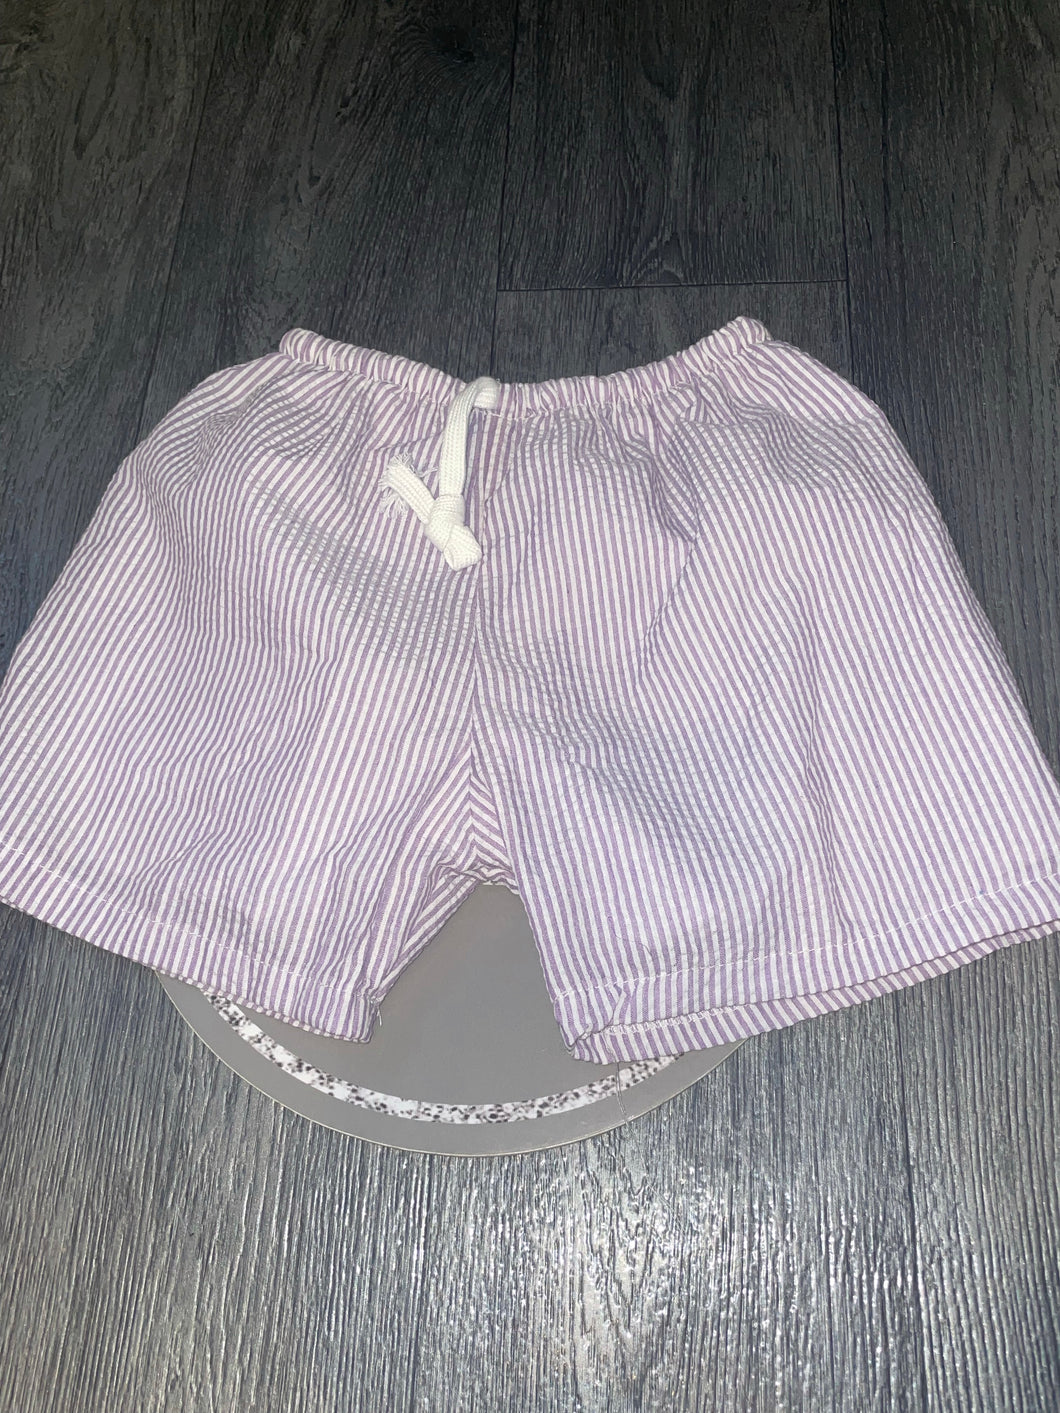 Lilac Shorts/swimshorts age 6